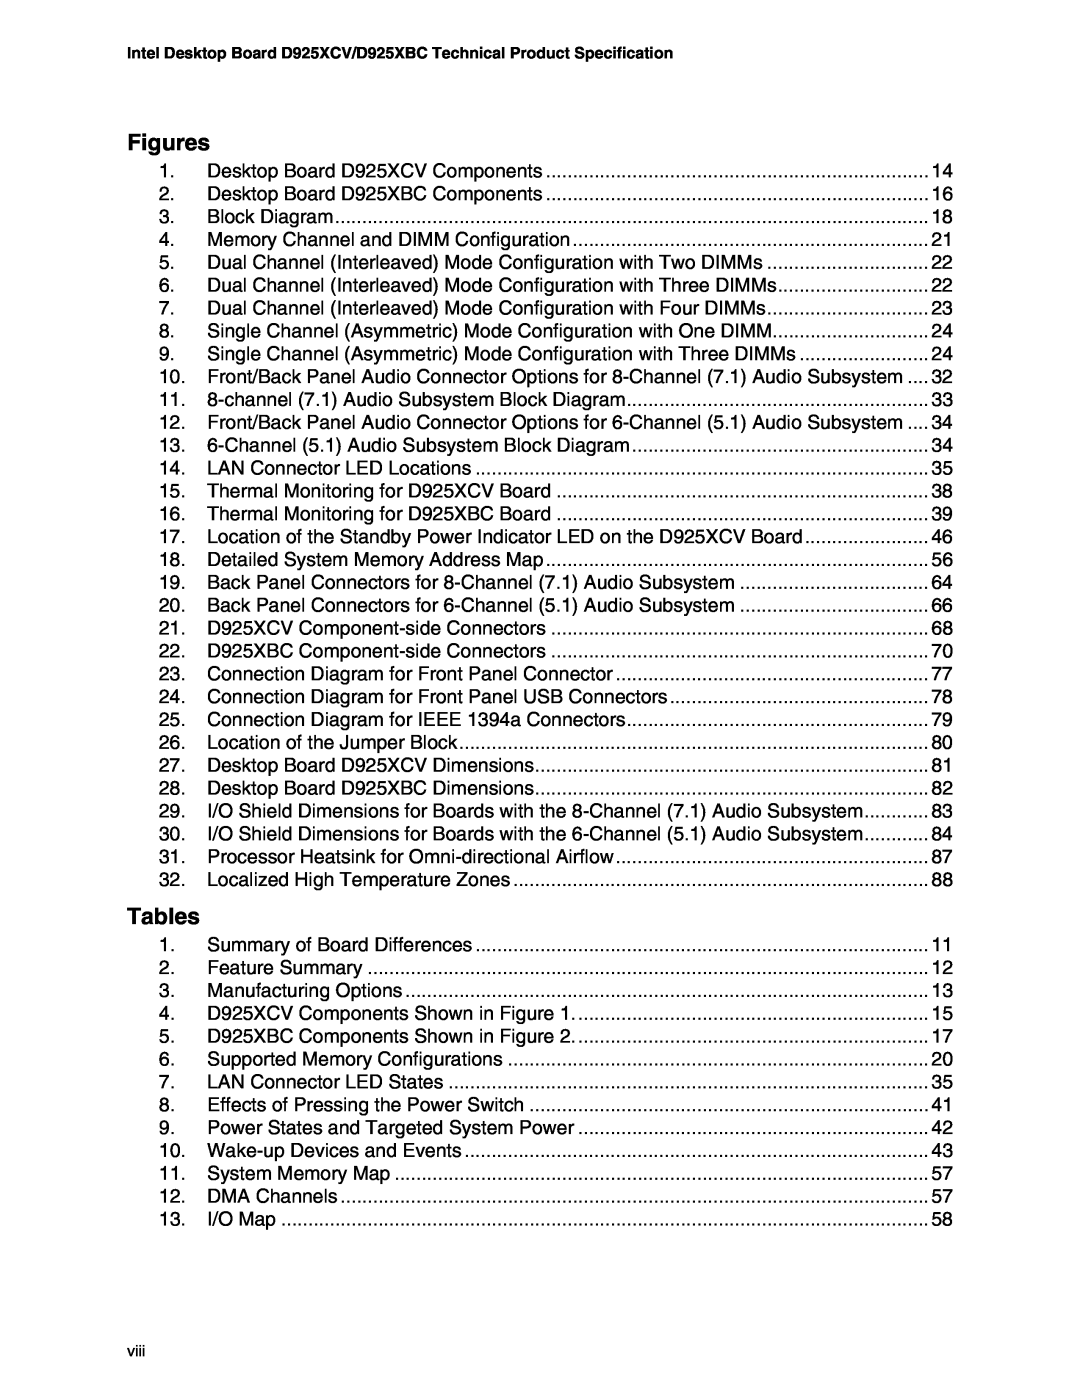 Intel D925XCV, D925XBC specifications Figures, Tables 